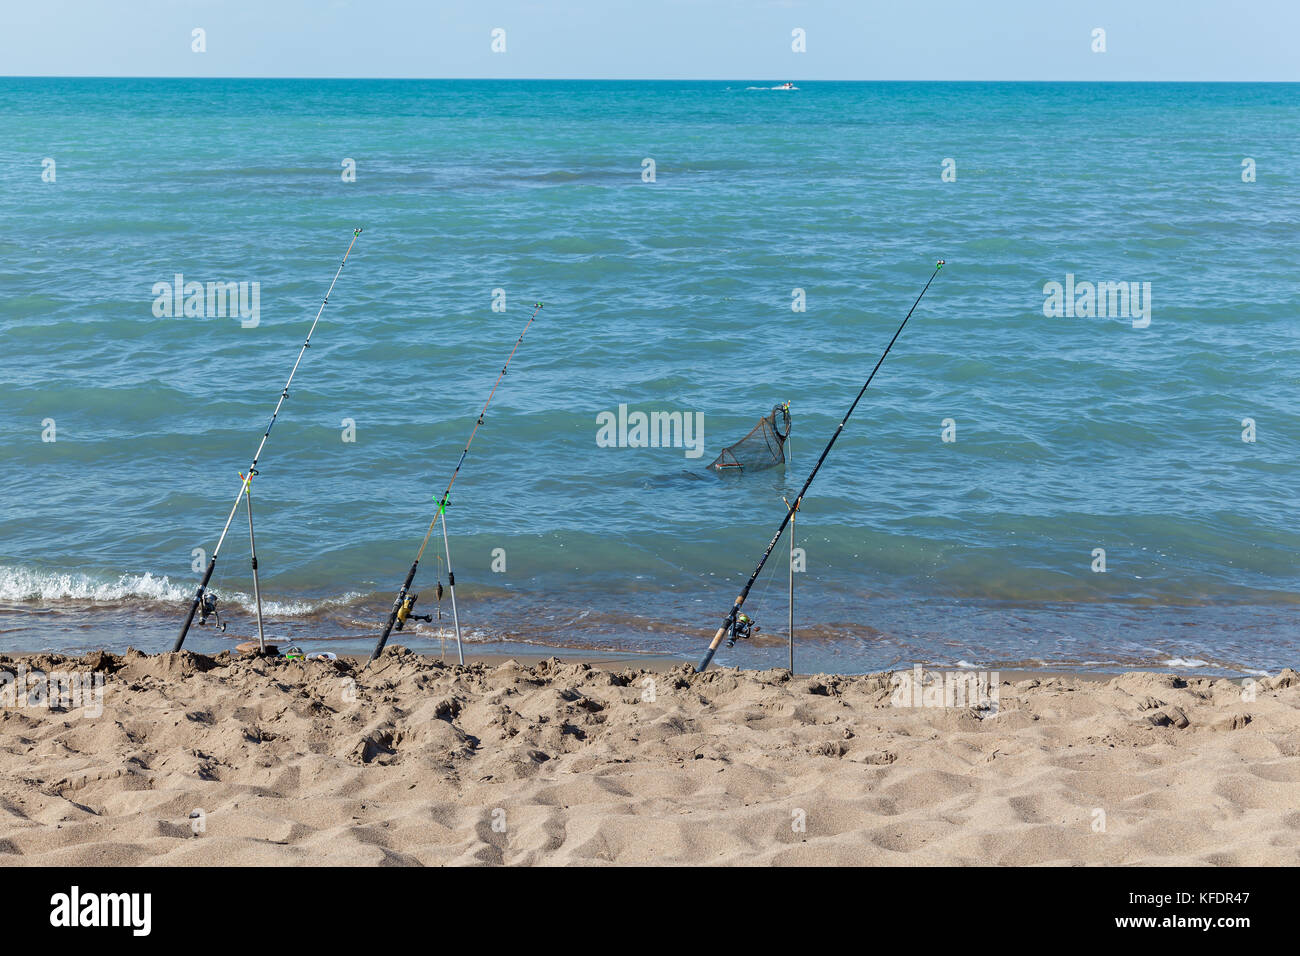 https://c8.alamy.com/comp/KFDR47/fishing-rods-stand-on-the-sandy-beach-fixed-fishing-rod-set-up-on-KFDR47.jpg